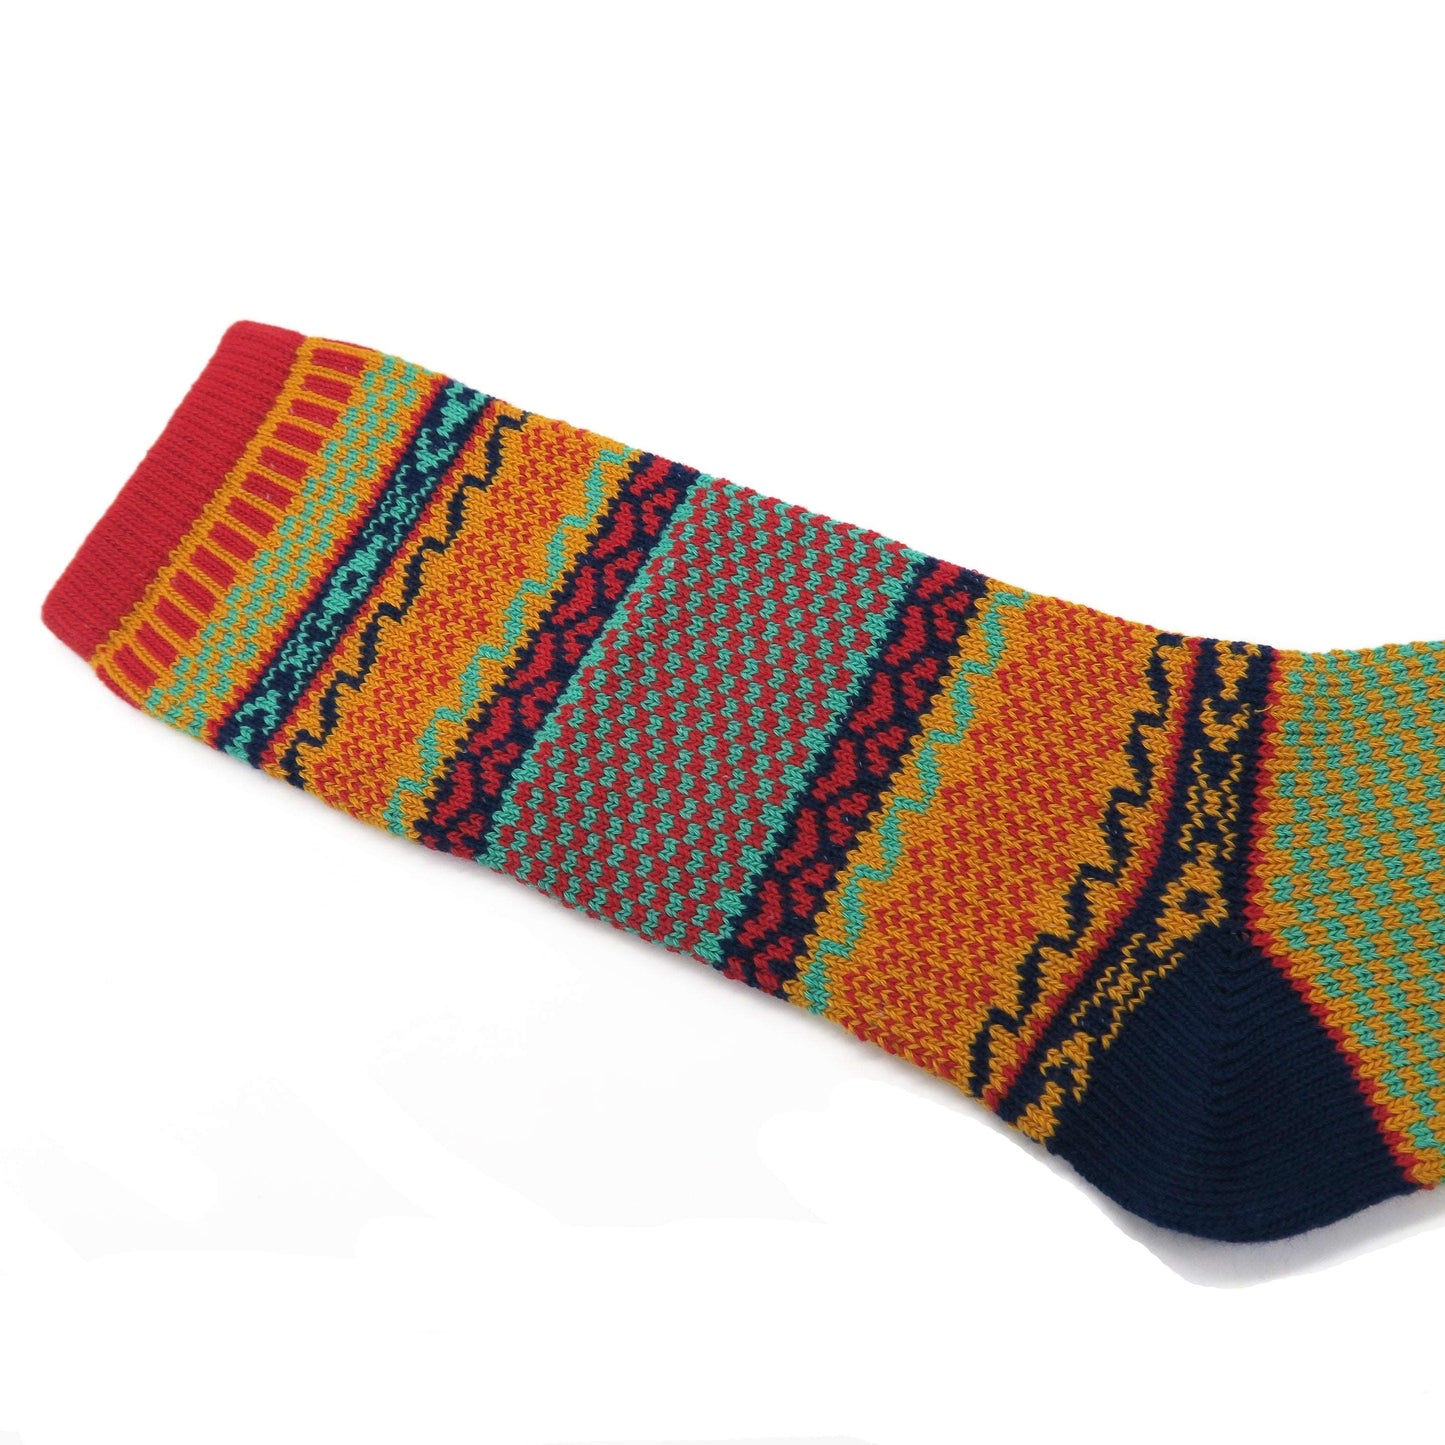 aka tribal sock - red tribal pattern sock